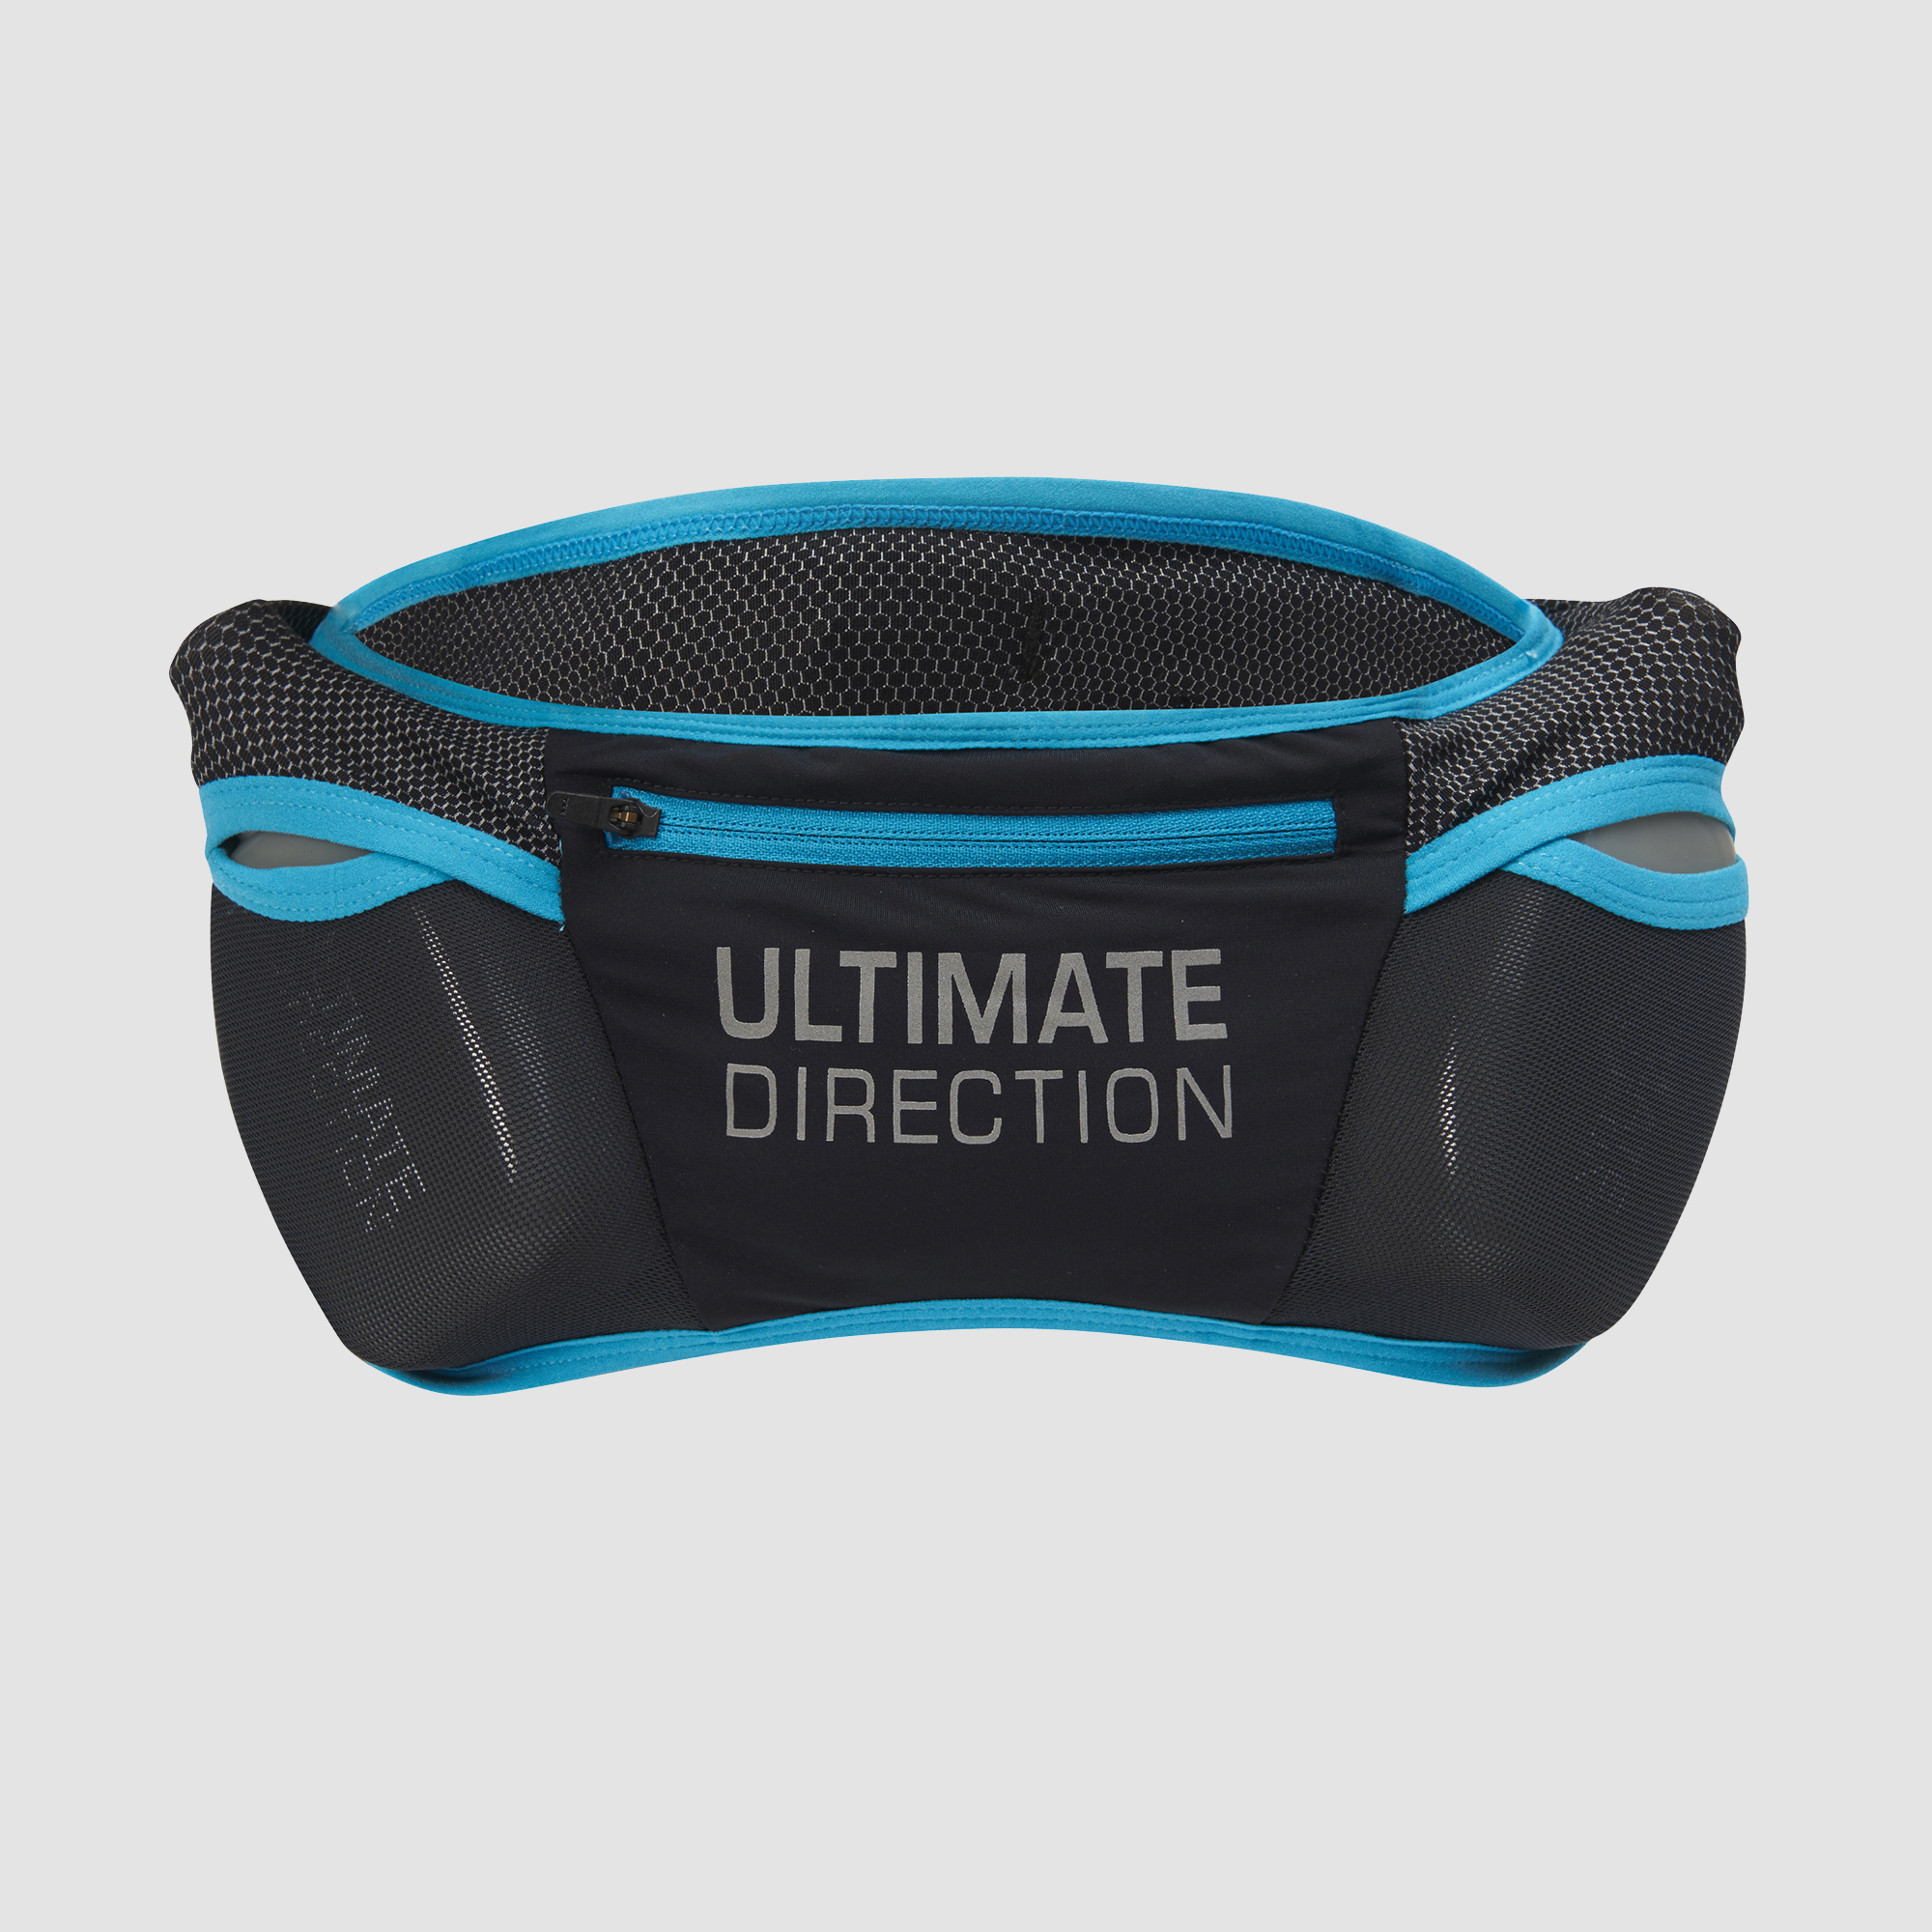 Ultimate Direction Hydrolight Belt Size XL